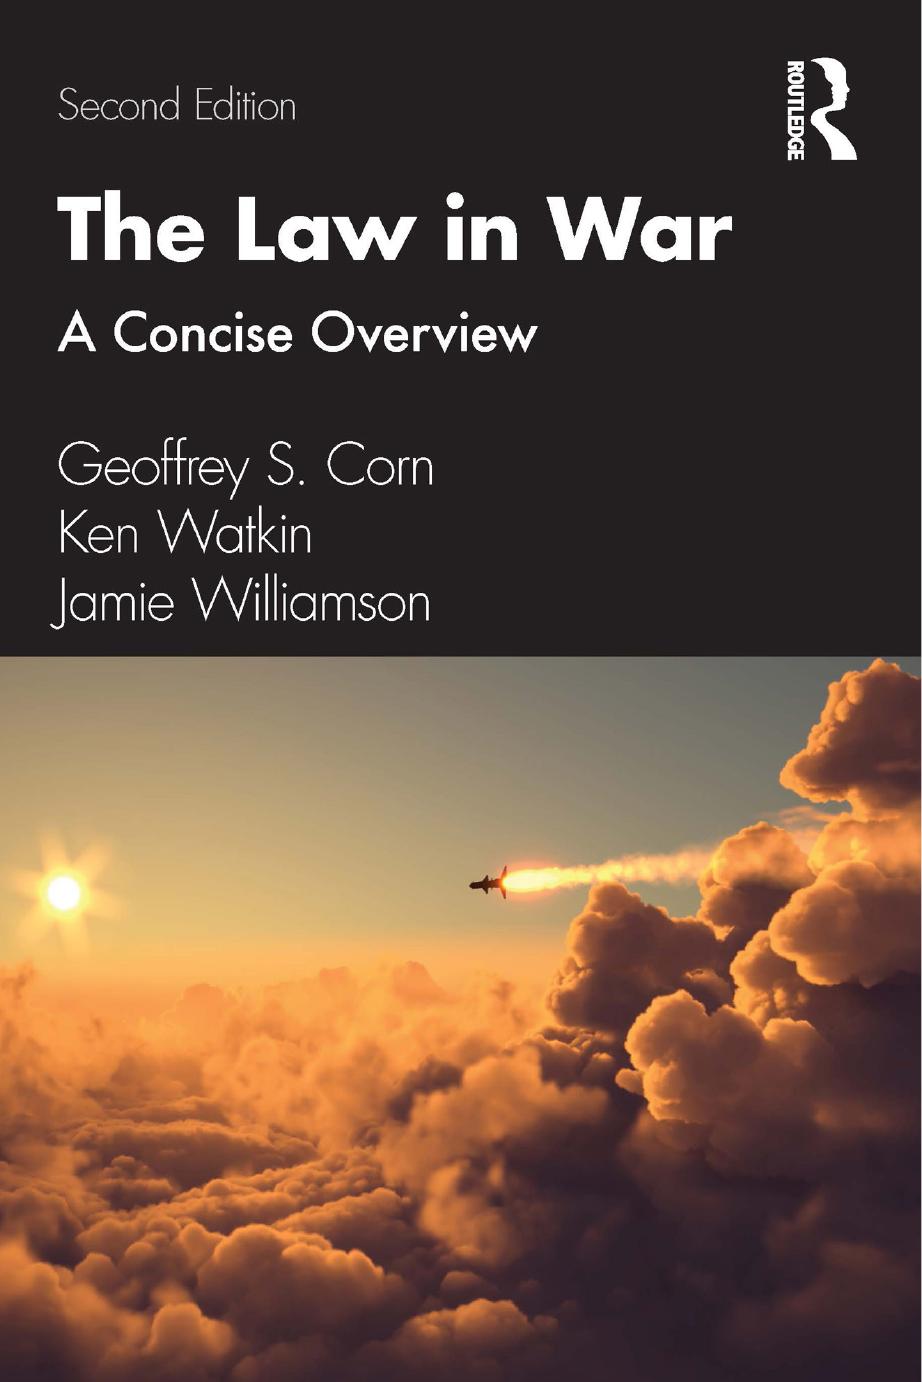 The Law in War: A Concise Overview by Geoffrey S. Corn Ken Watkin Jamie Williamson